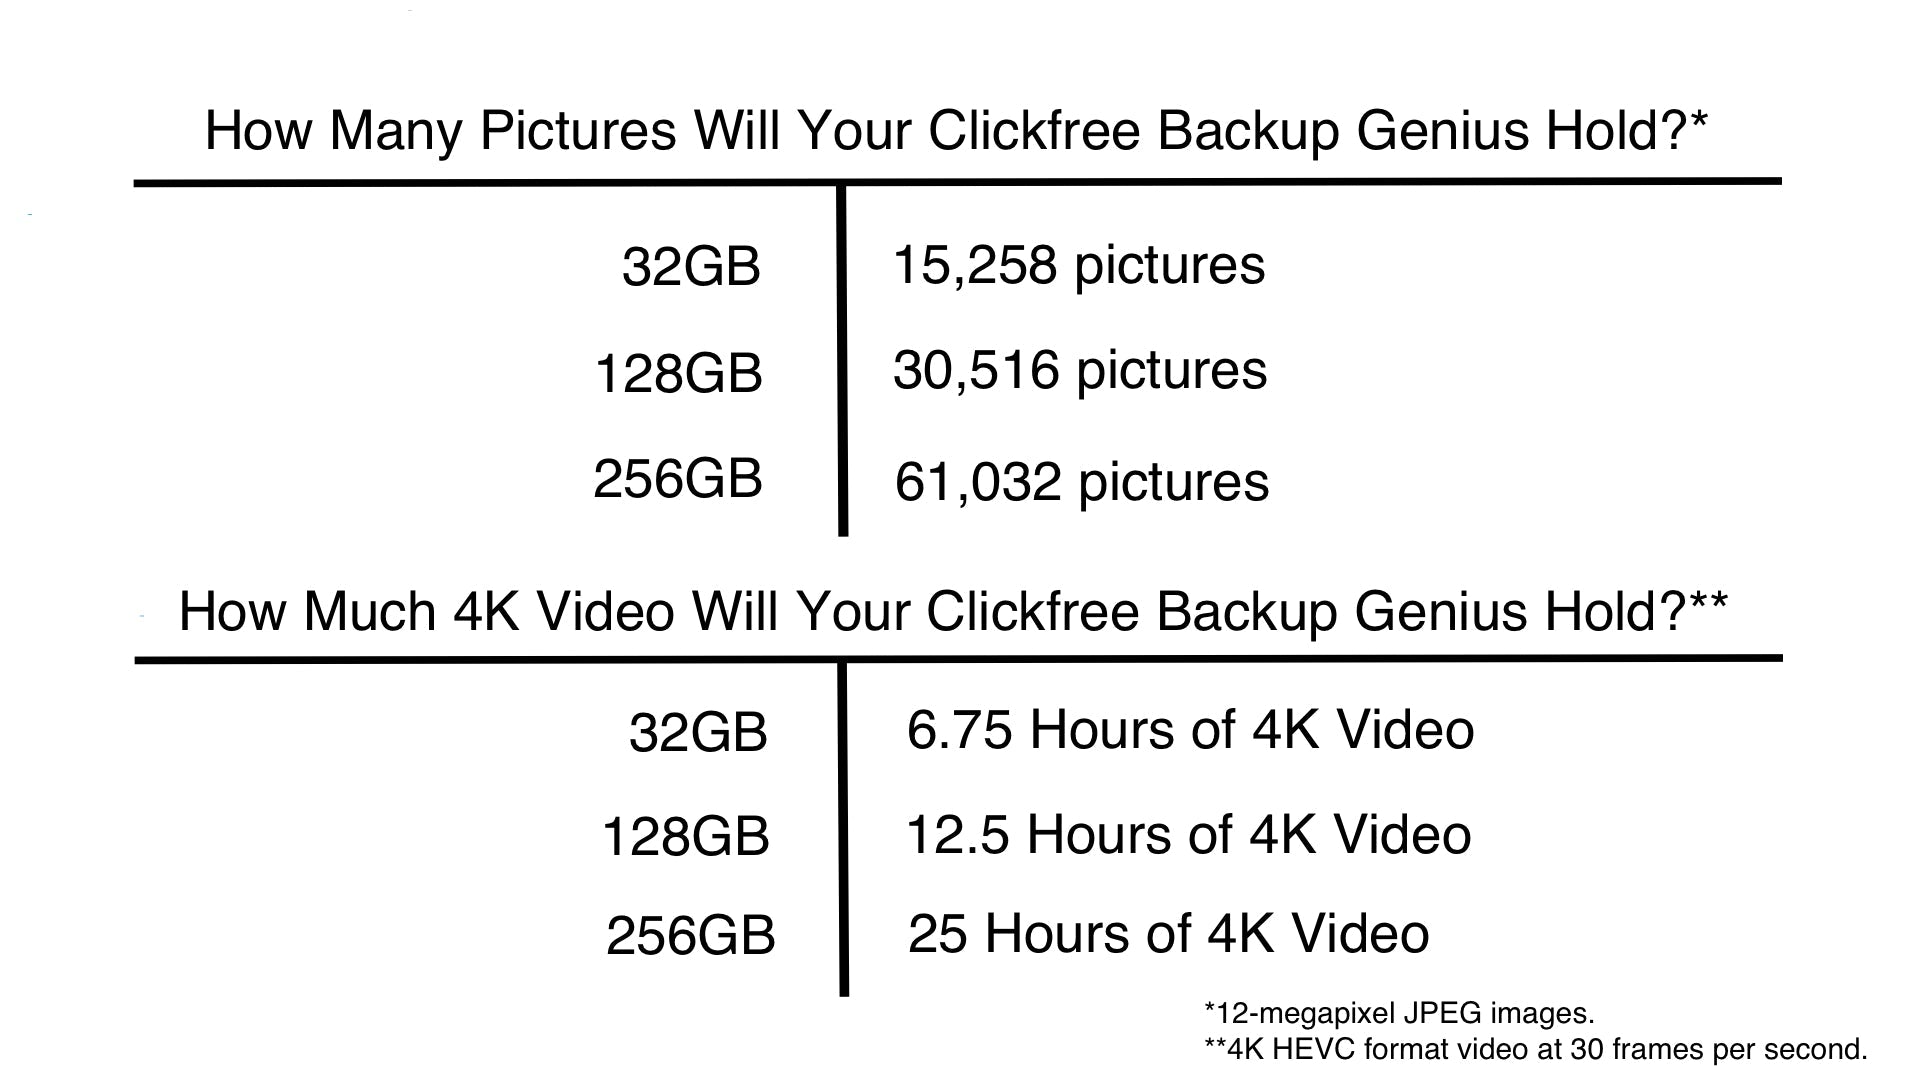 Backup Genius - 256GB Photo Backup and Storage Expansion - Clickfree